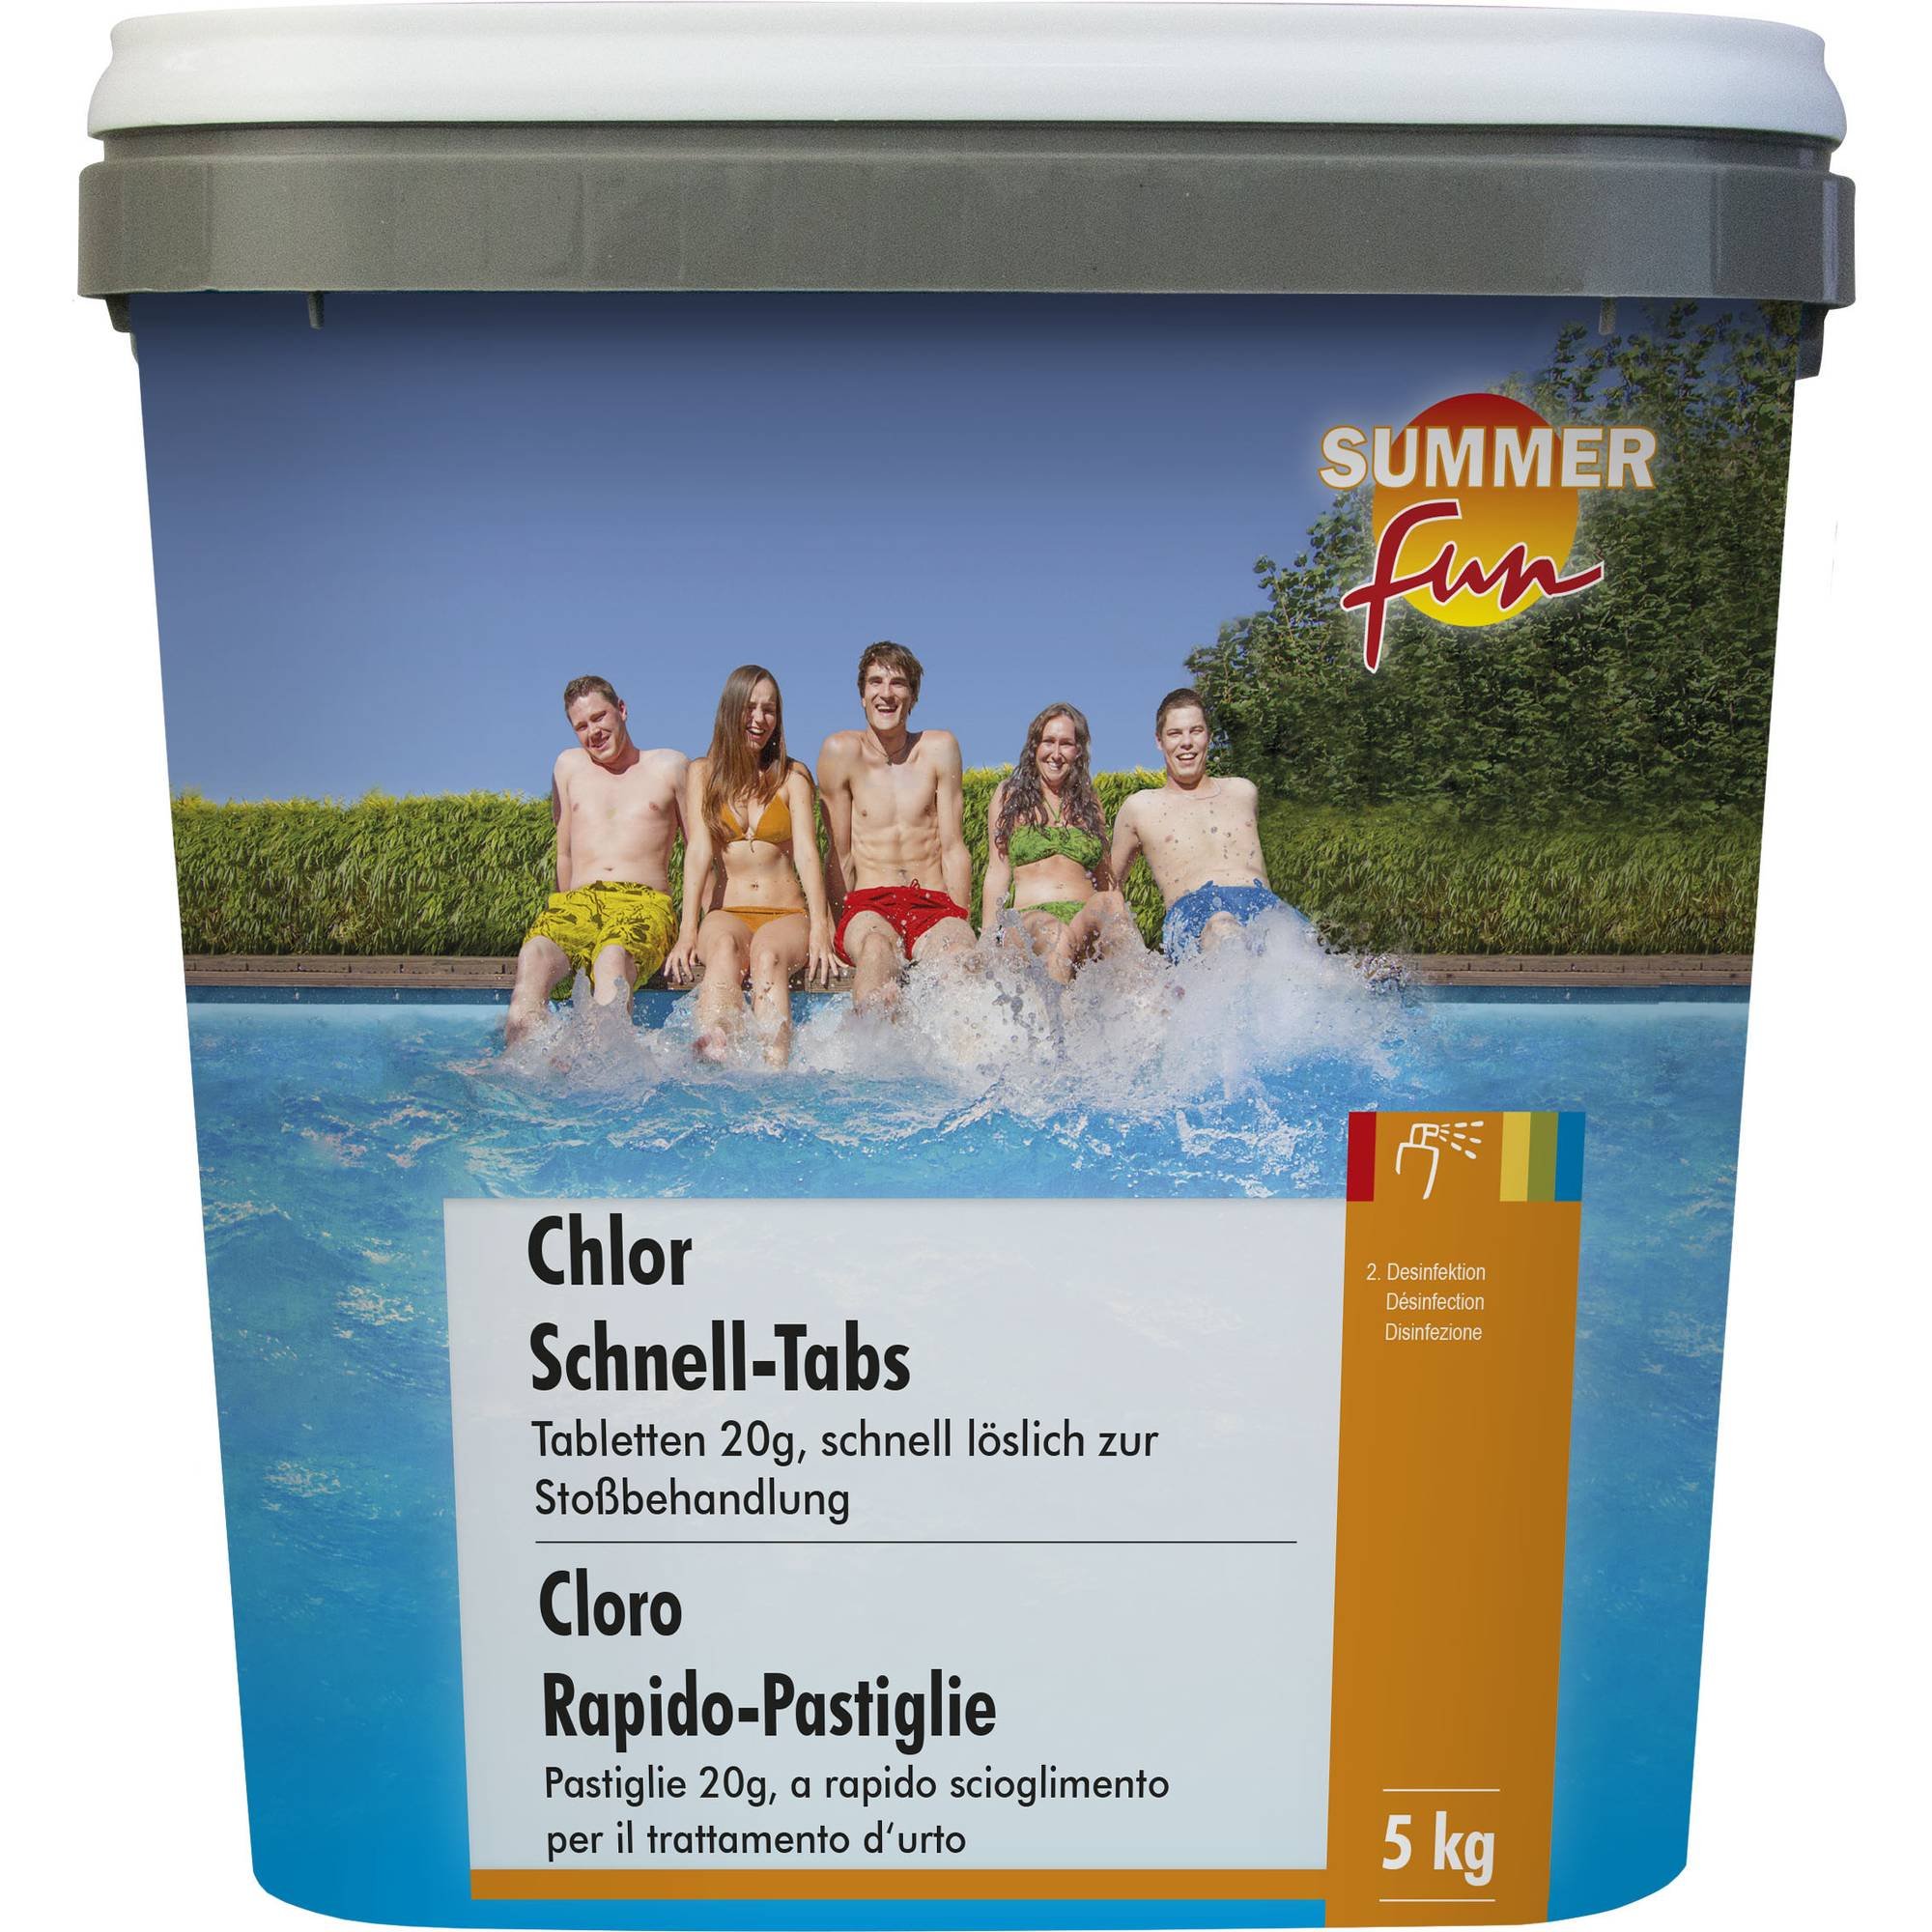 Summer Fun - Chlor Schnell-Tabs - 20g Tabletten, 5 kg